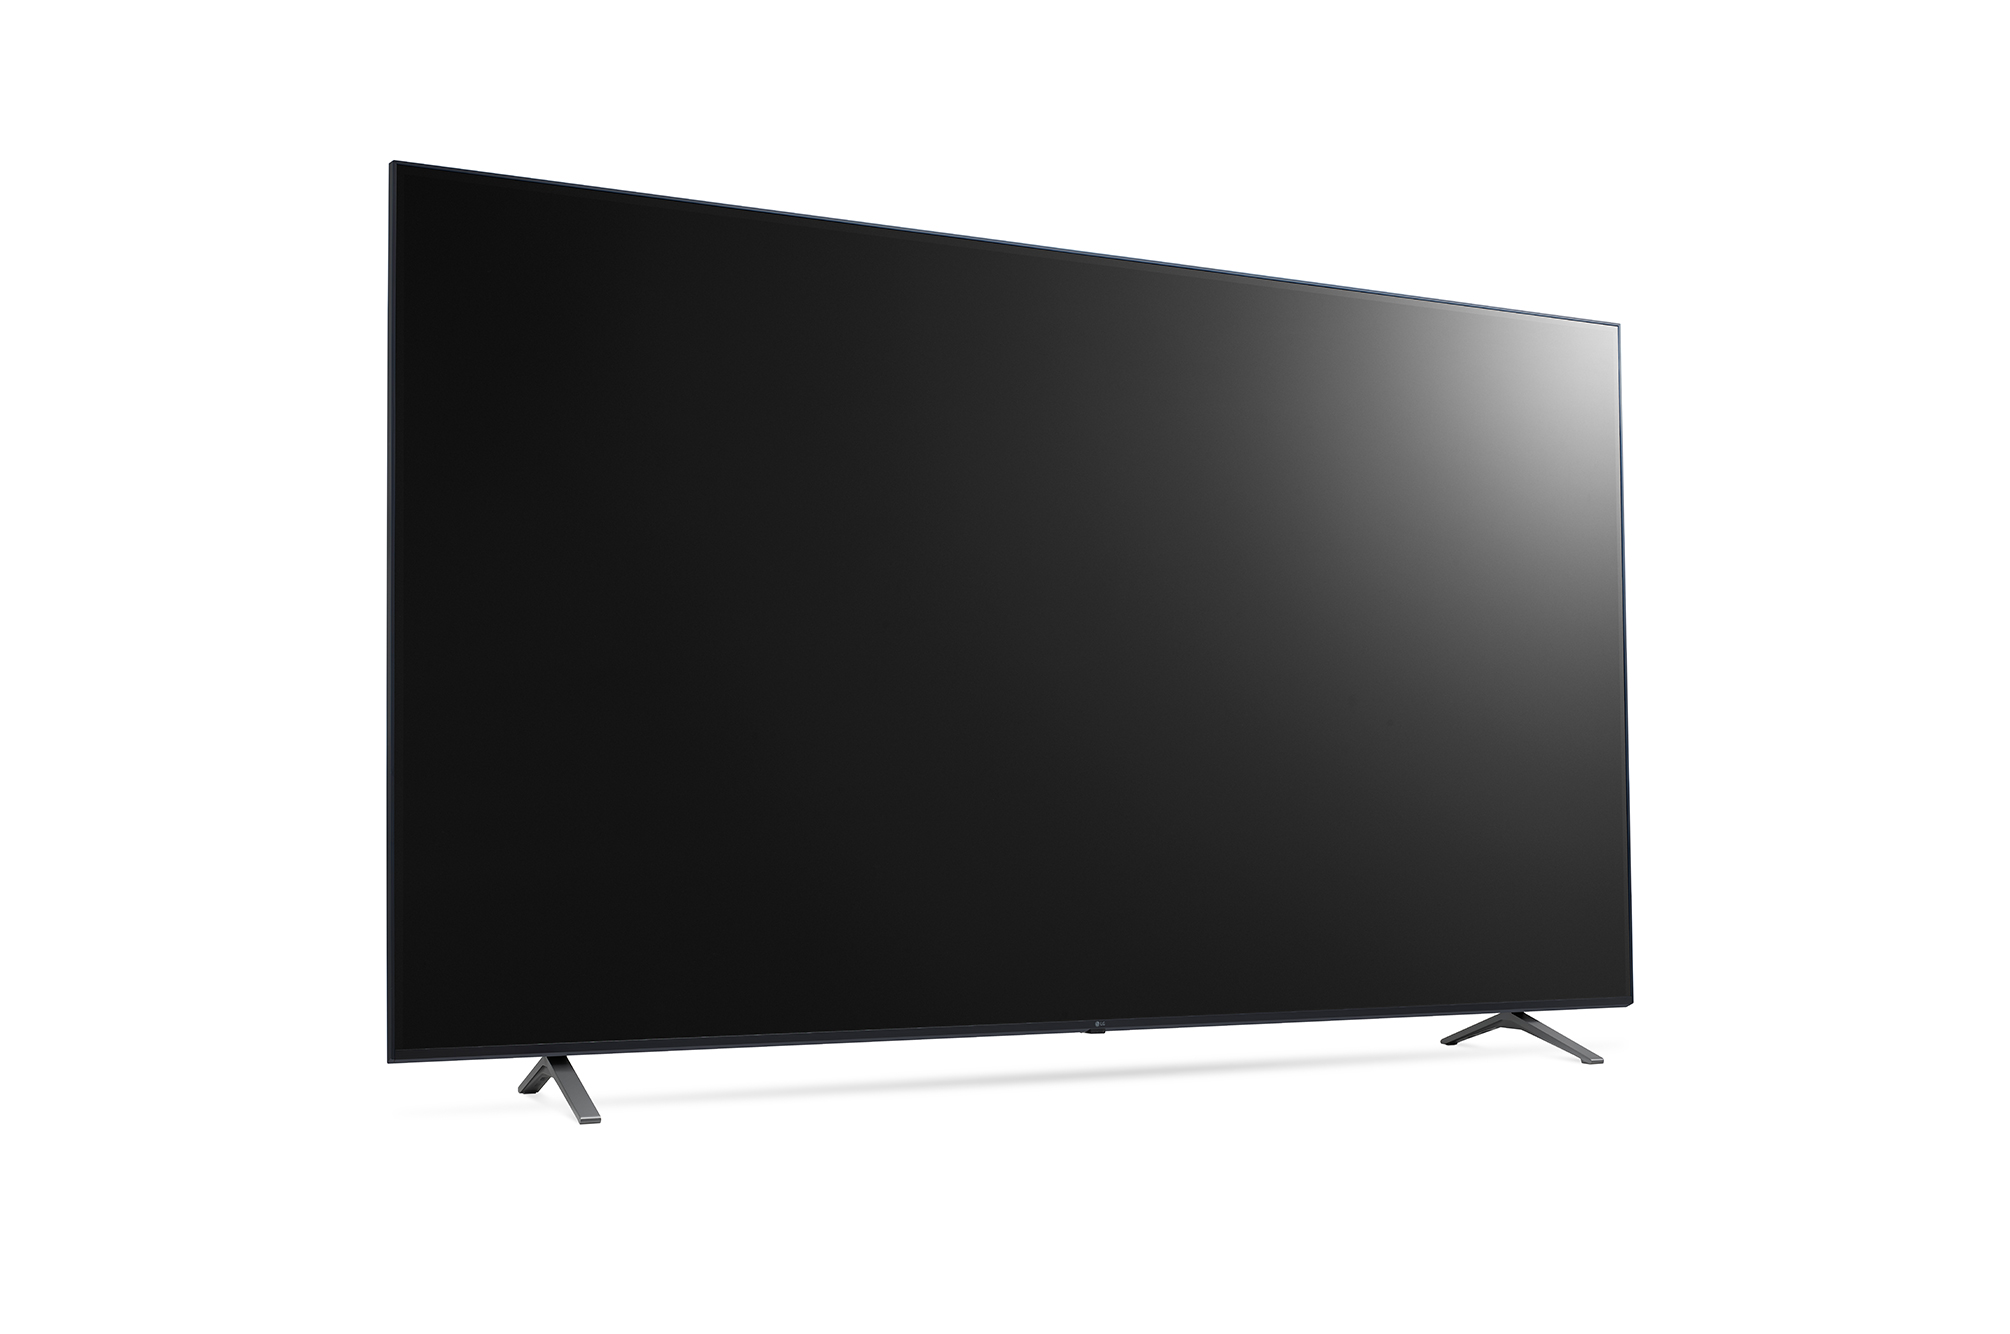 TV LED JLC 50″ Pulgadas 127 cm JLC-50A71WSBM SMART WEBOS 4K-UHD BLUETOOTH  CON MAGICCONTROL - JLC Electronics